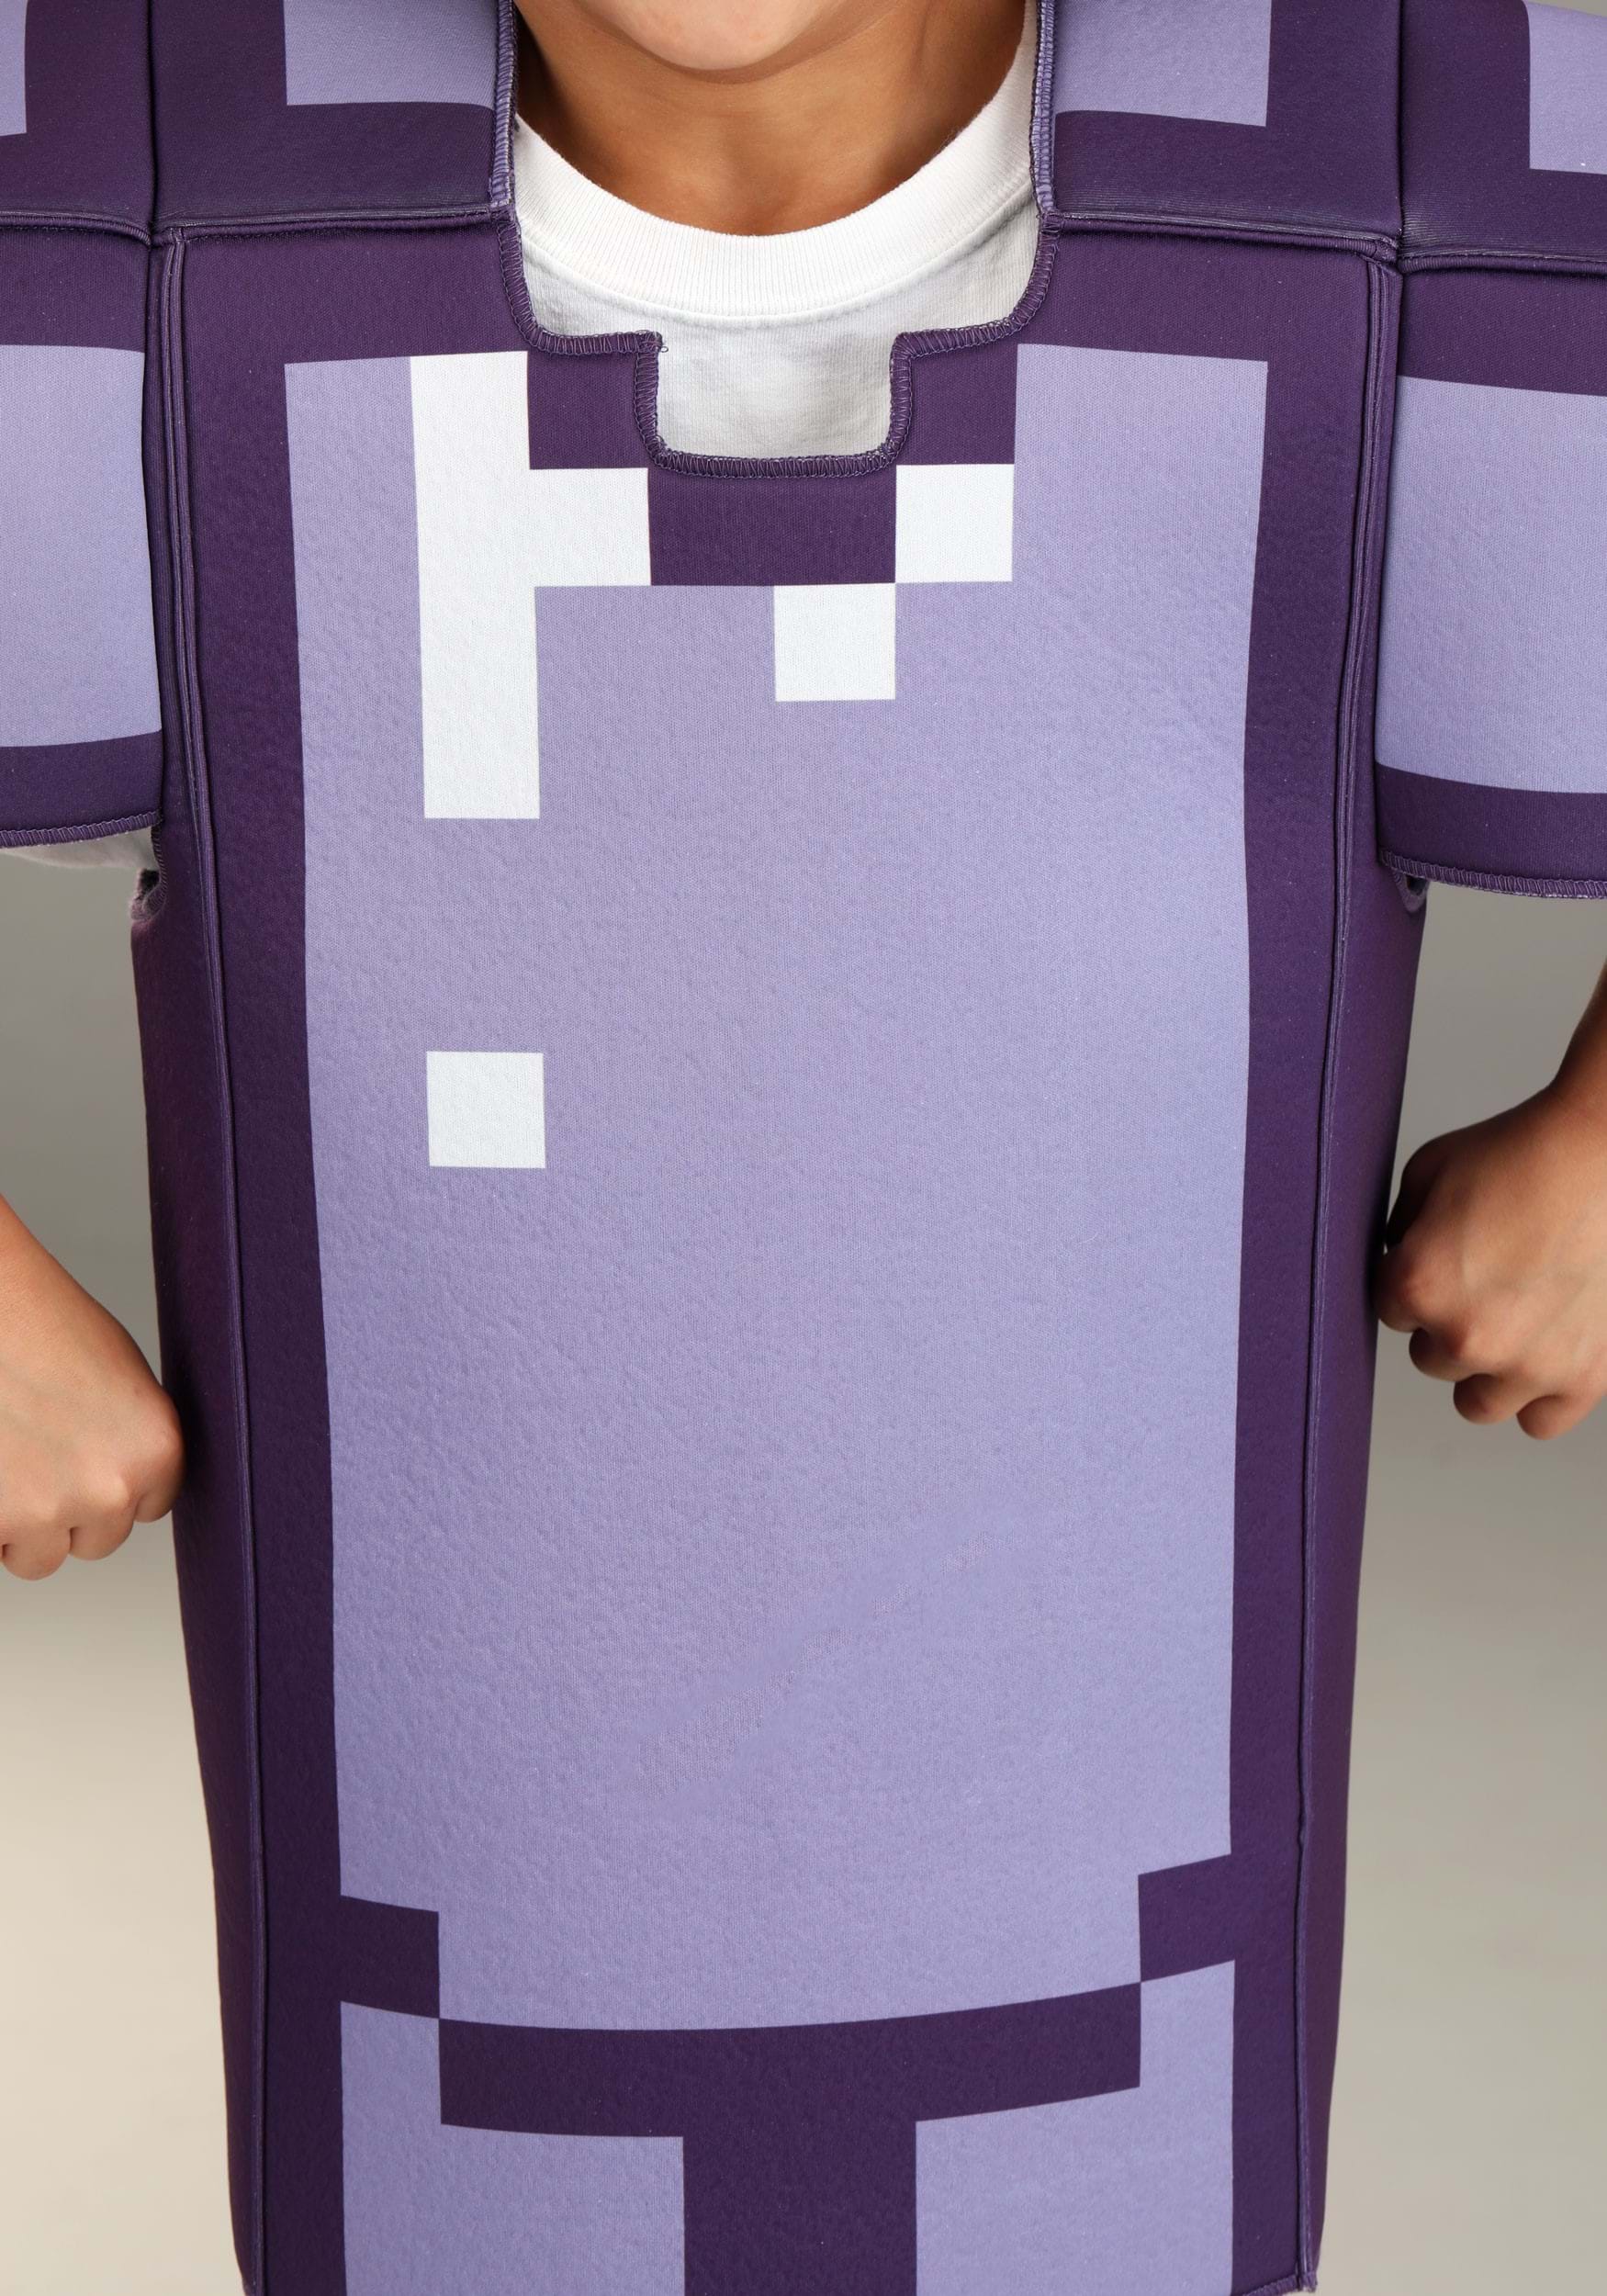 Minecraft Enchanted Diamond Armor Classic Costume for Kids